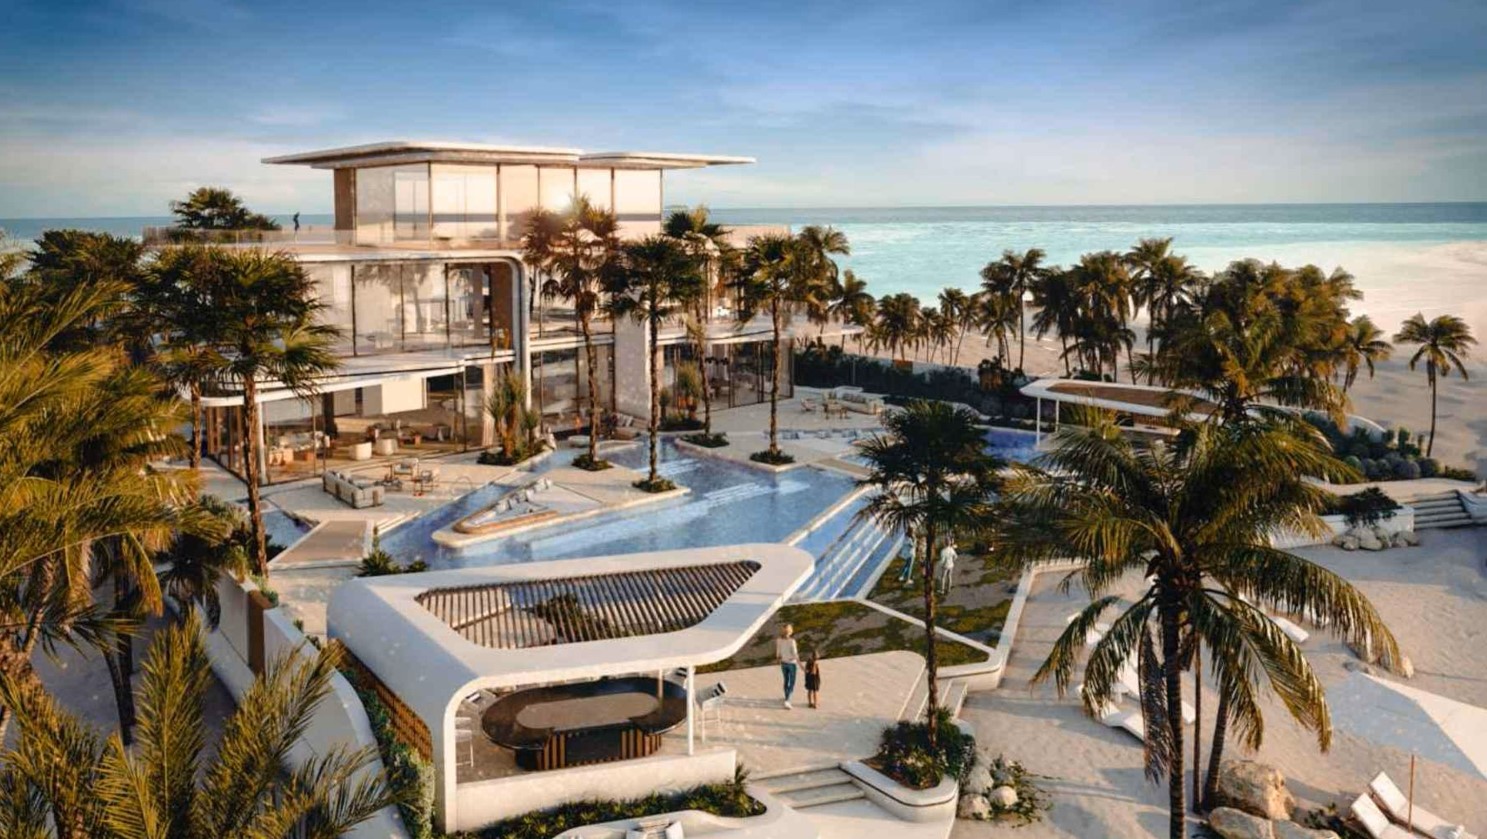 Amali Island Villas For Sale At The World Islands, Dubai